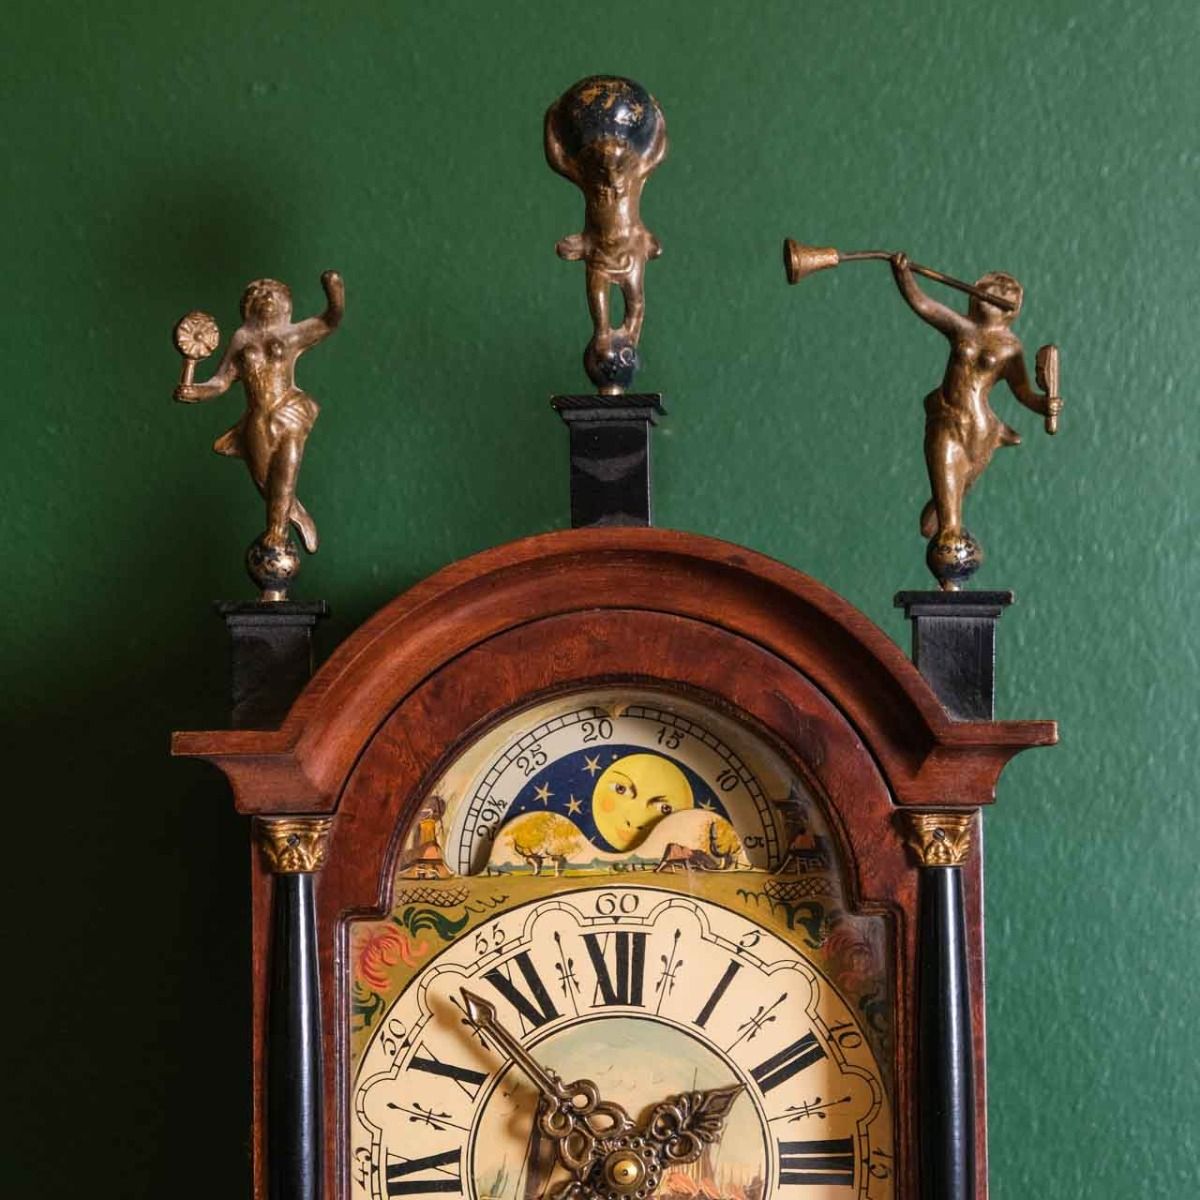 Antique Dutch Clock,Antique Dutch wall clock with lunar calendar and winding chain